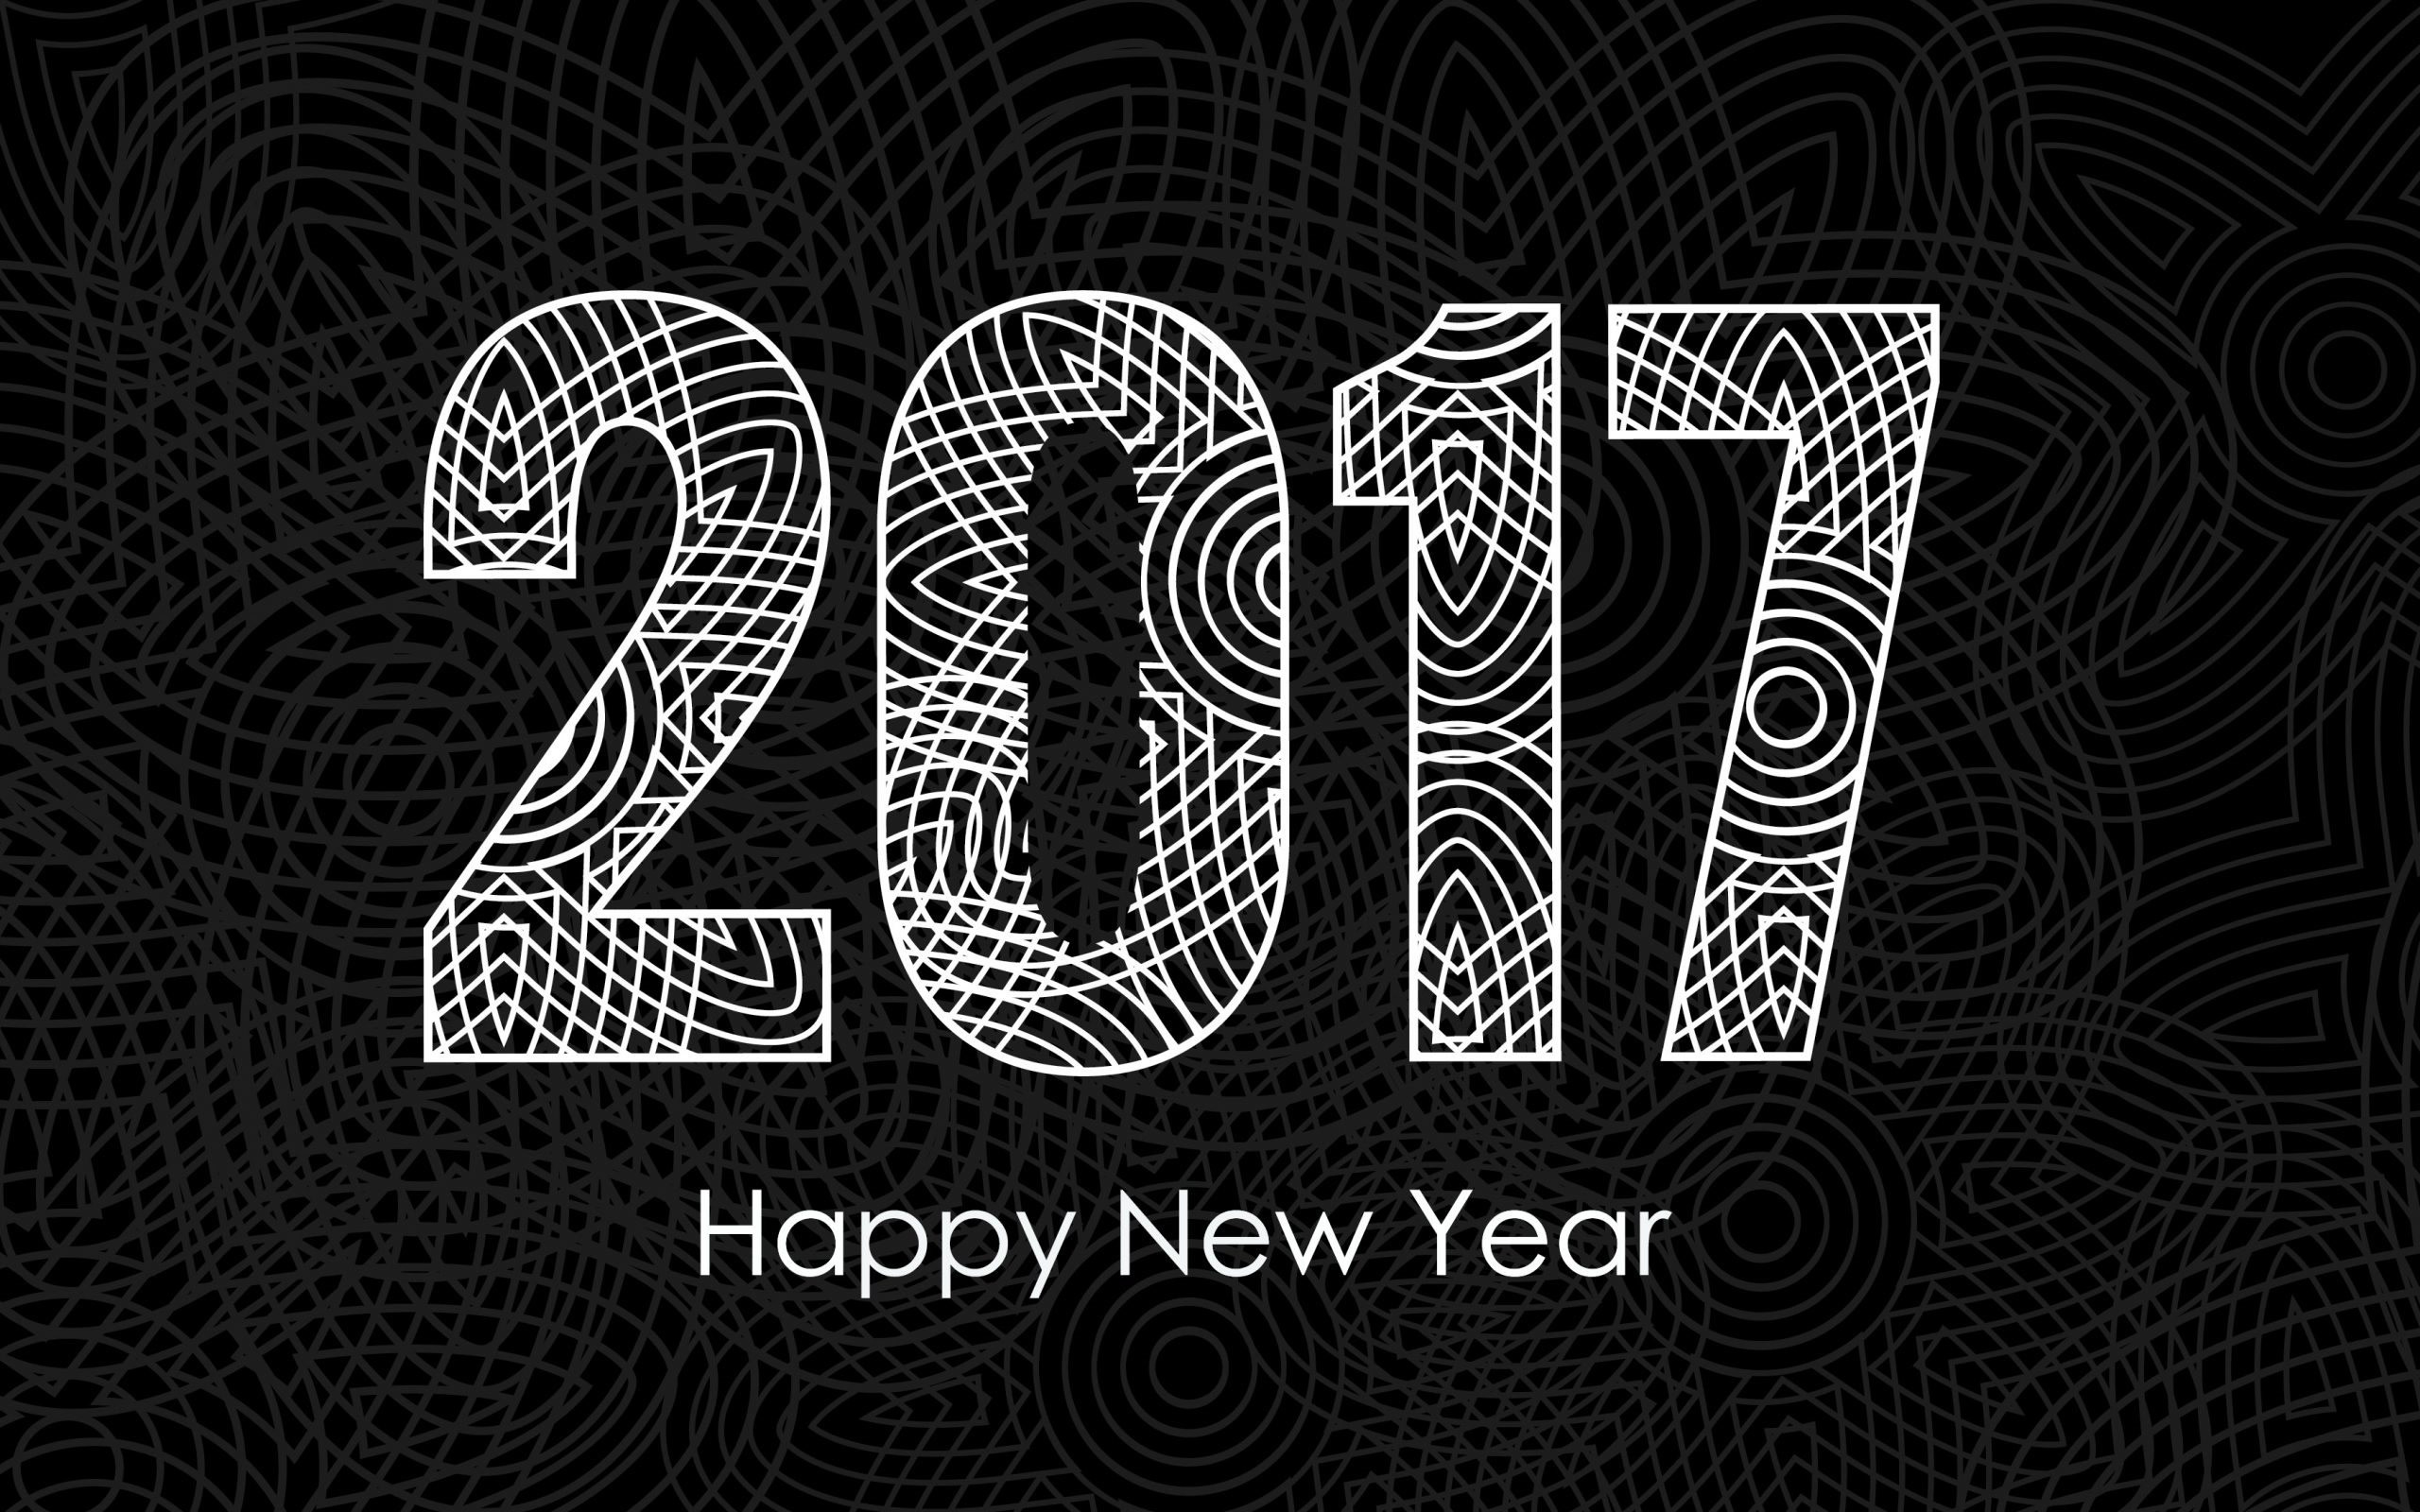 2017 Happy New Year